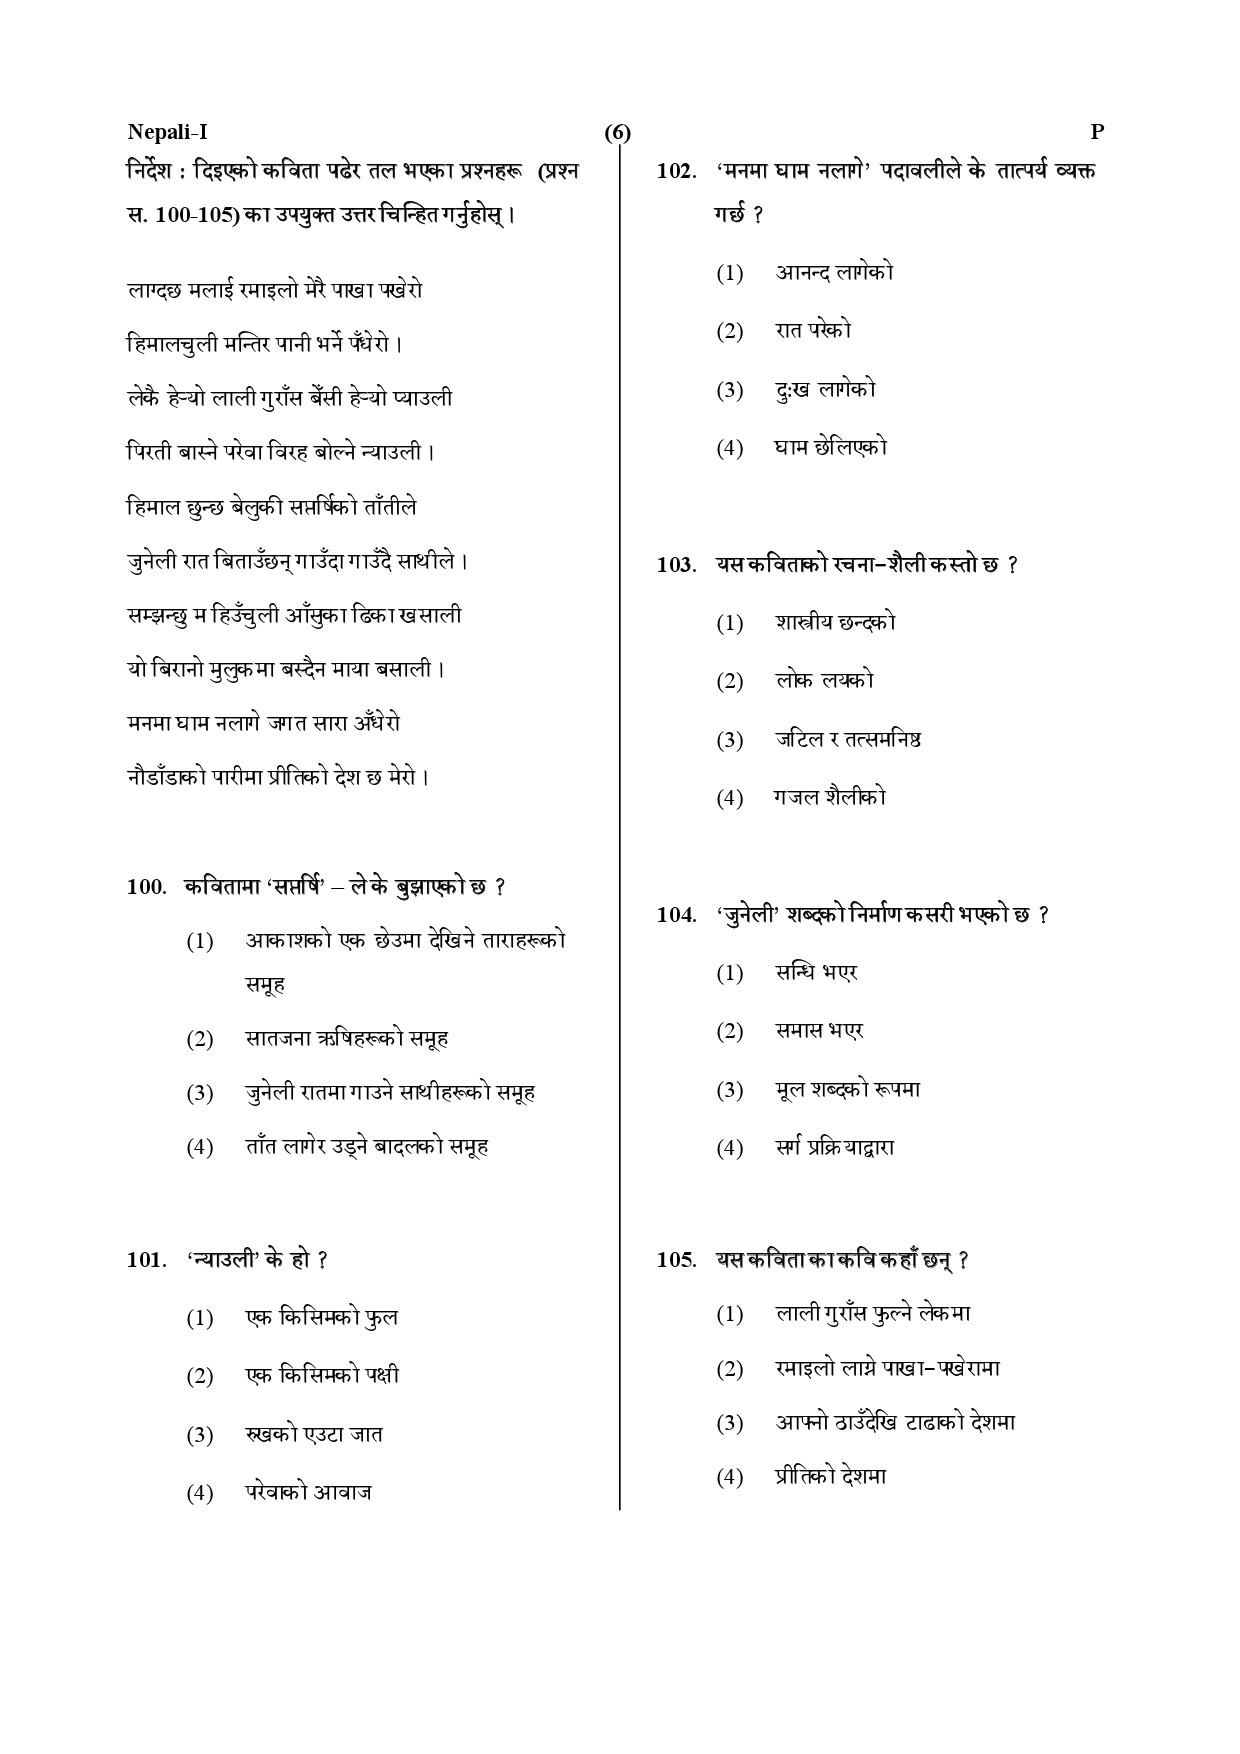 CTET July 2019 Paper 1 Part IV Language 1 Nepali 3